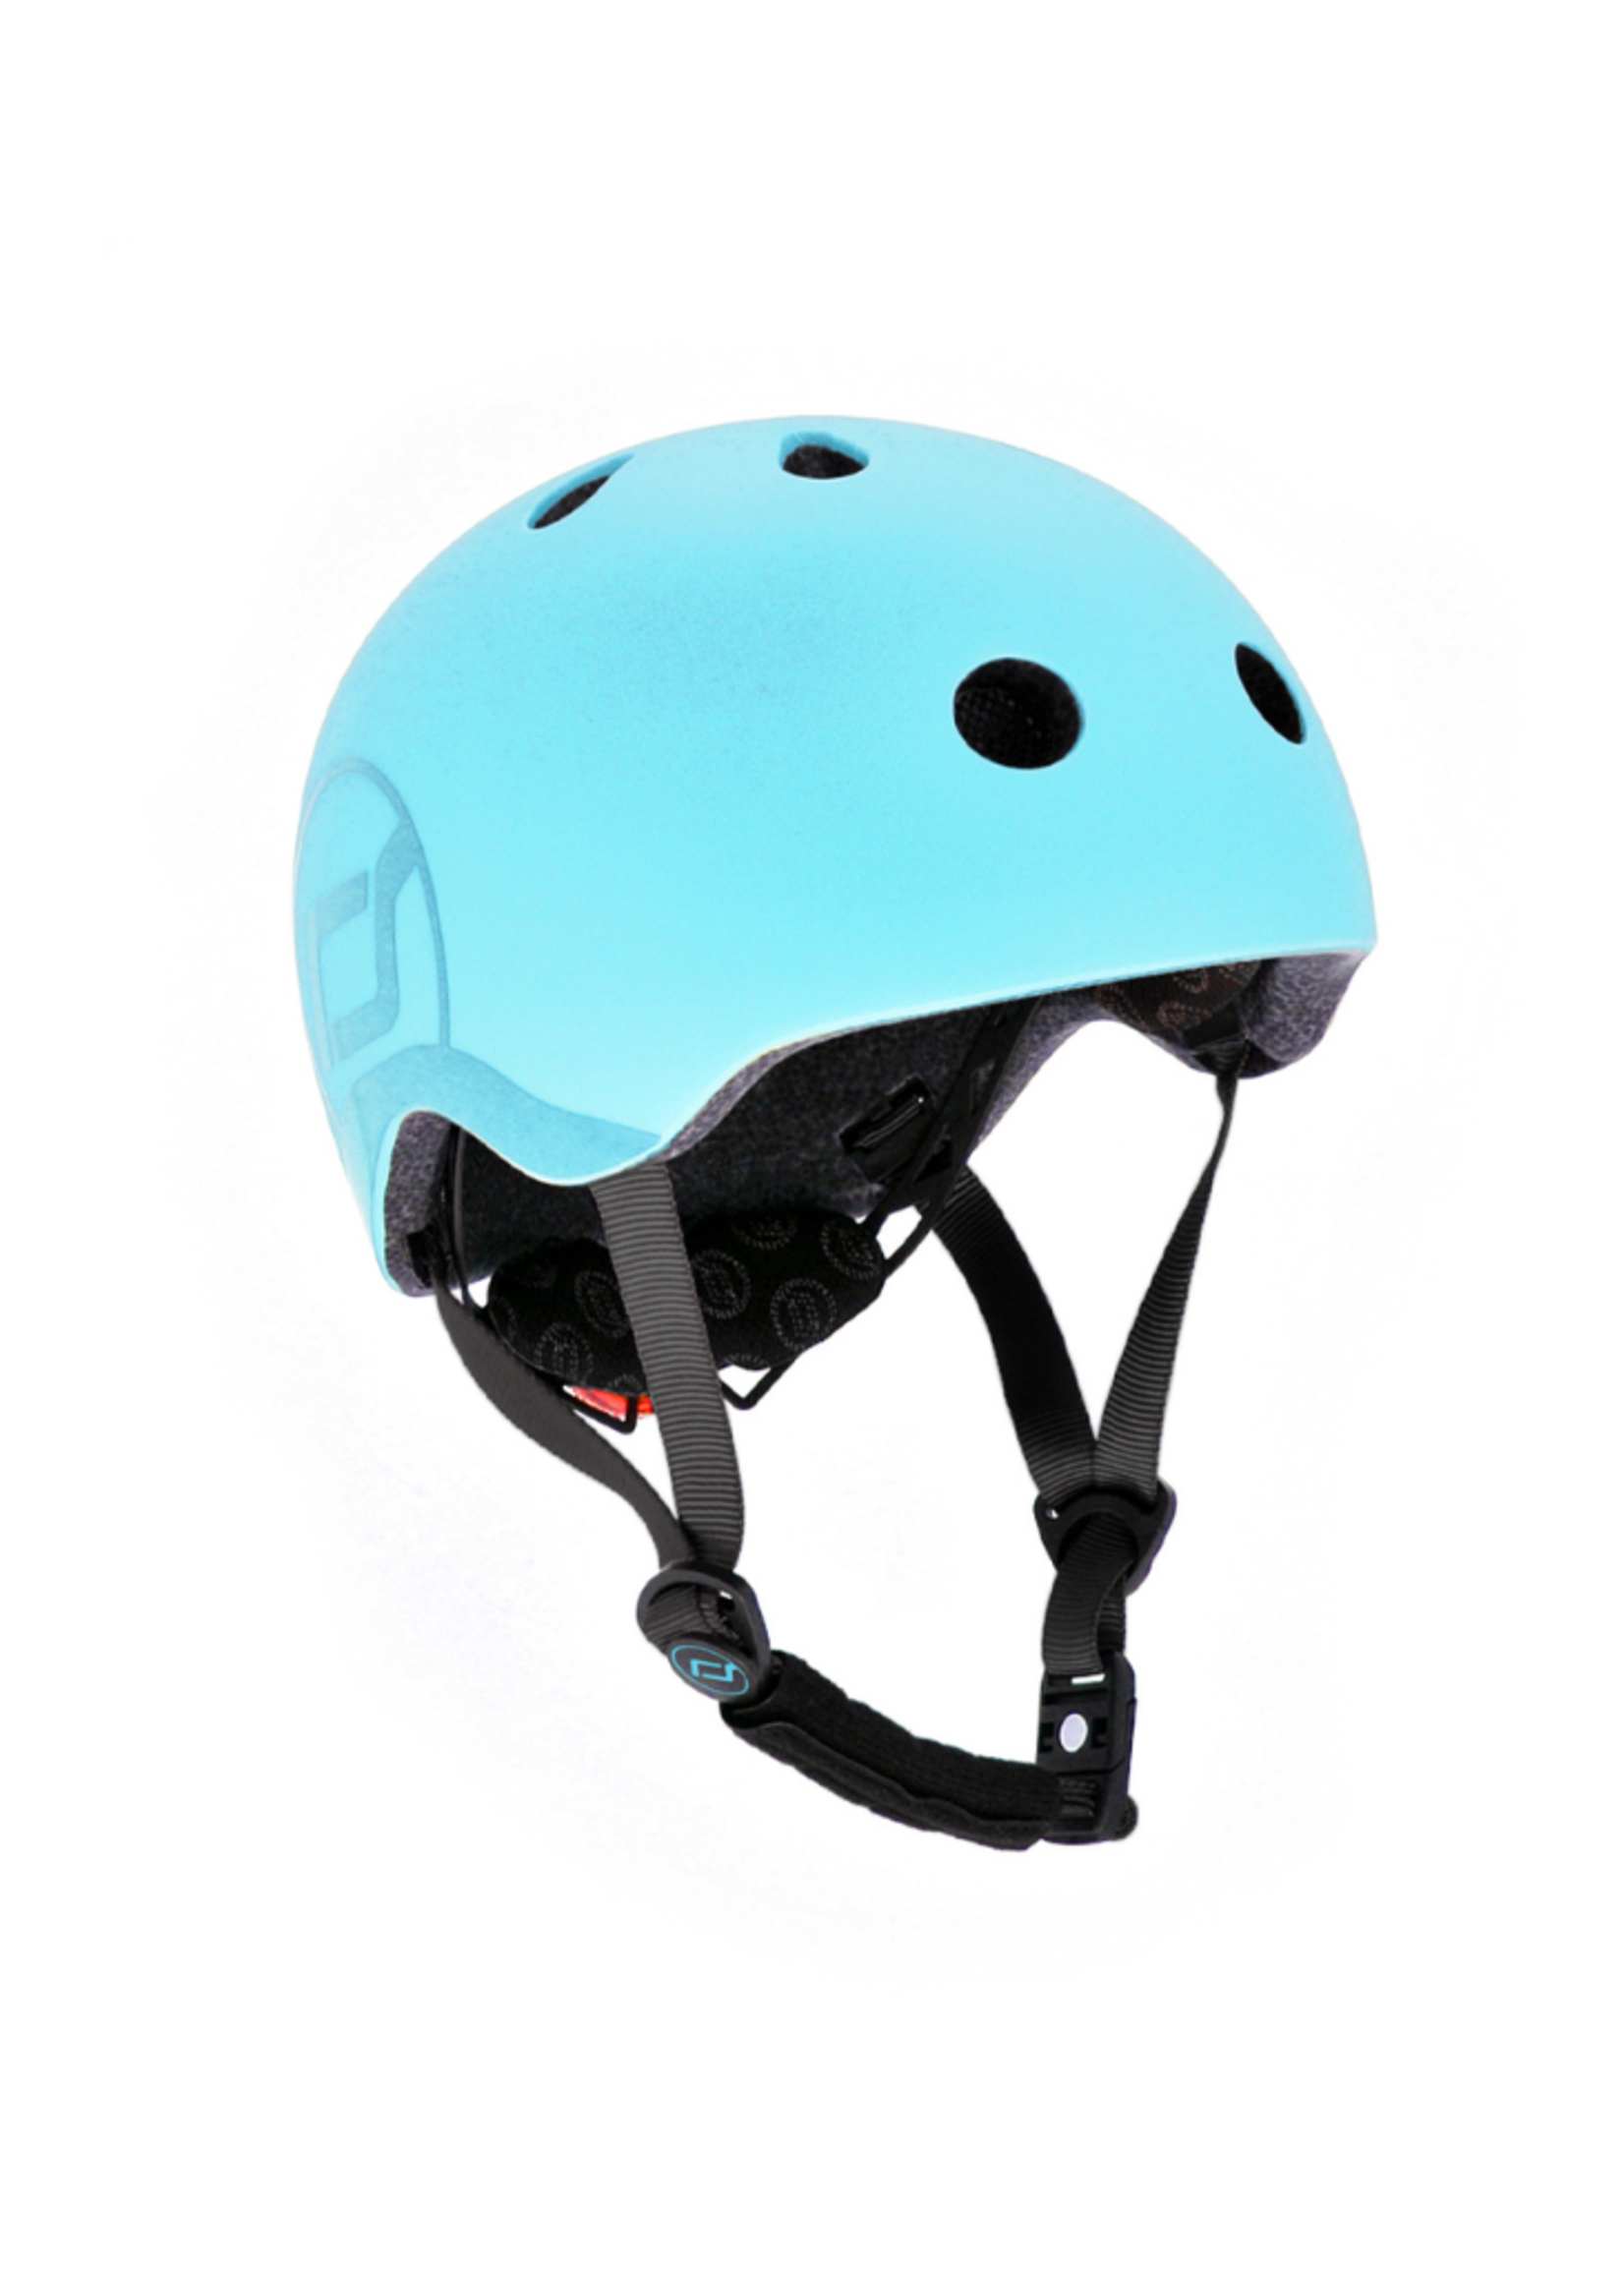 Scoot and Ride Helmet - Small/Medium - Blueberry